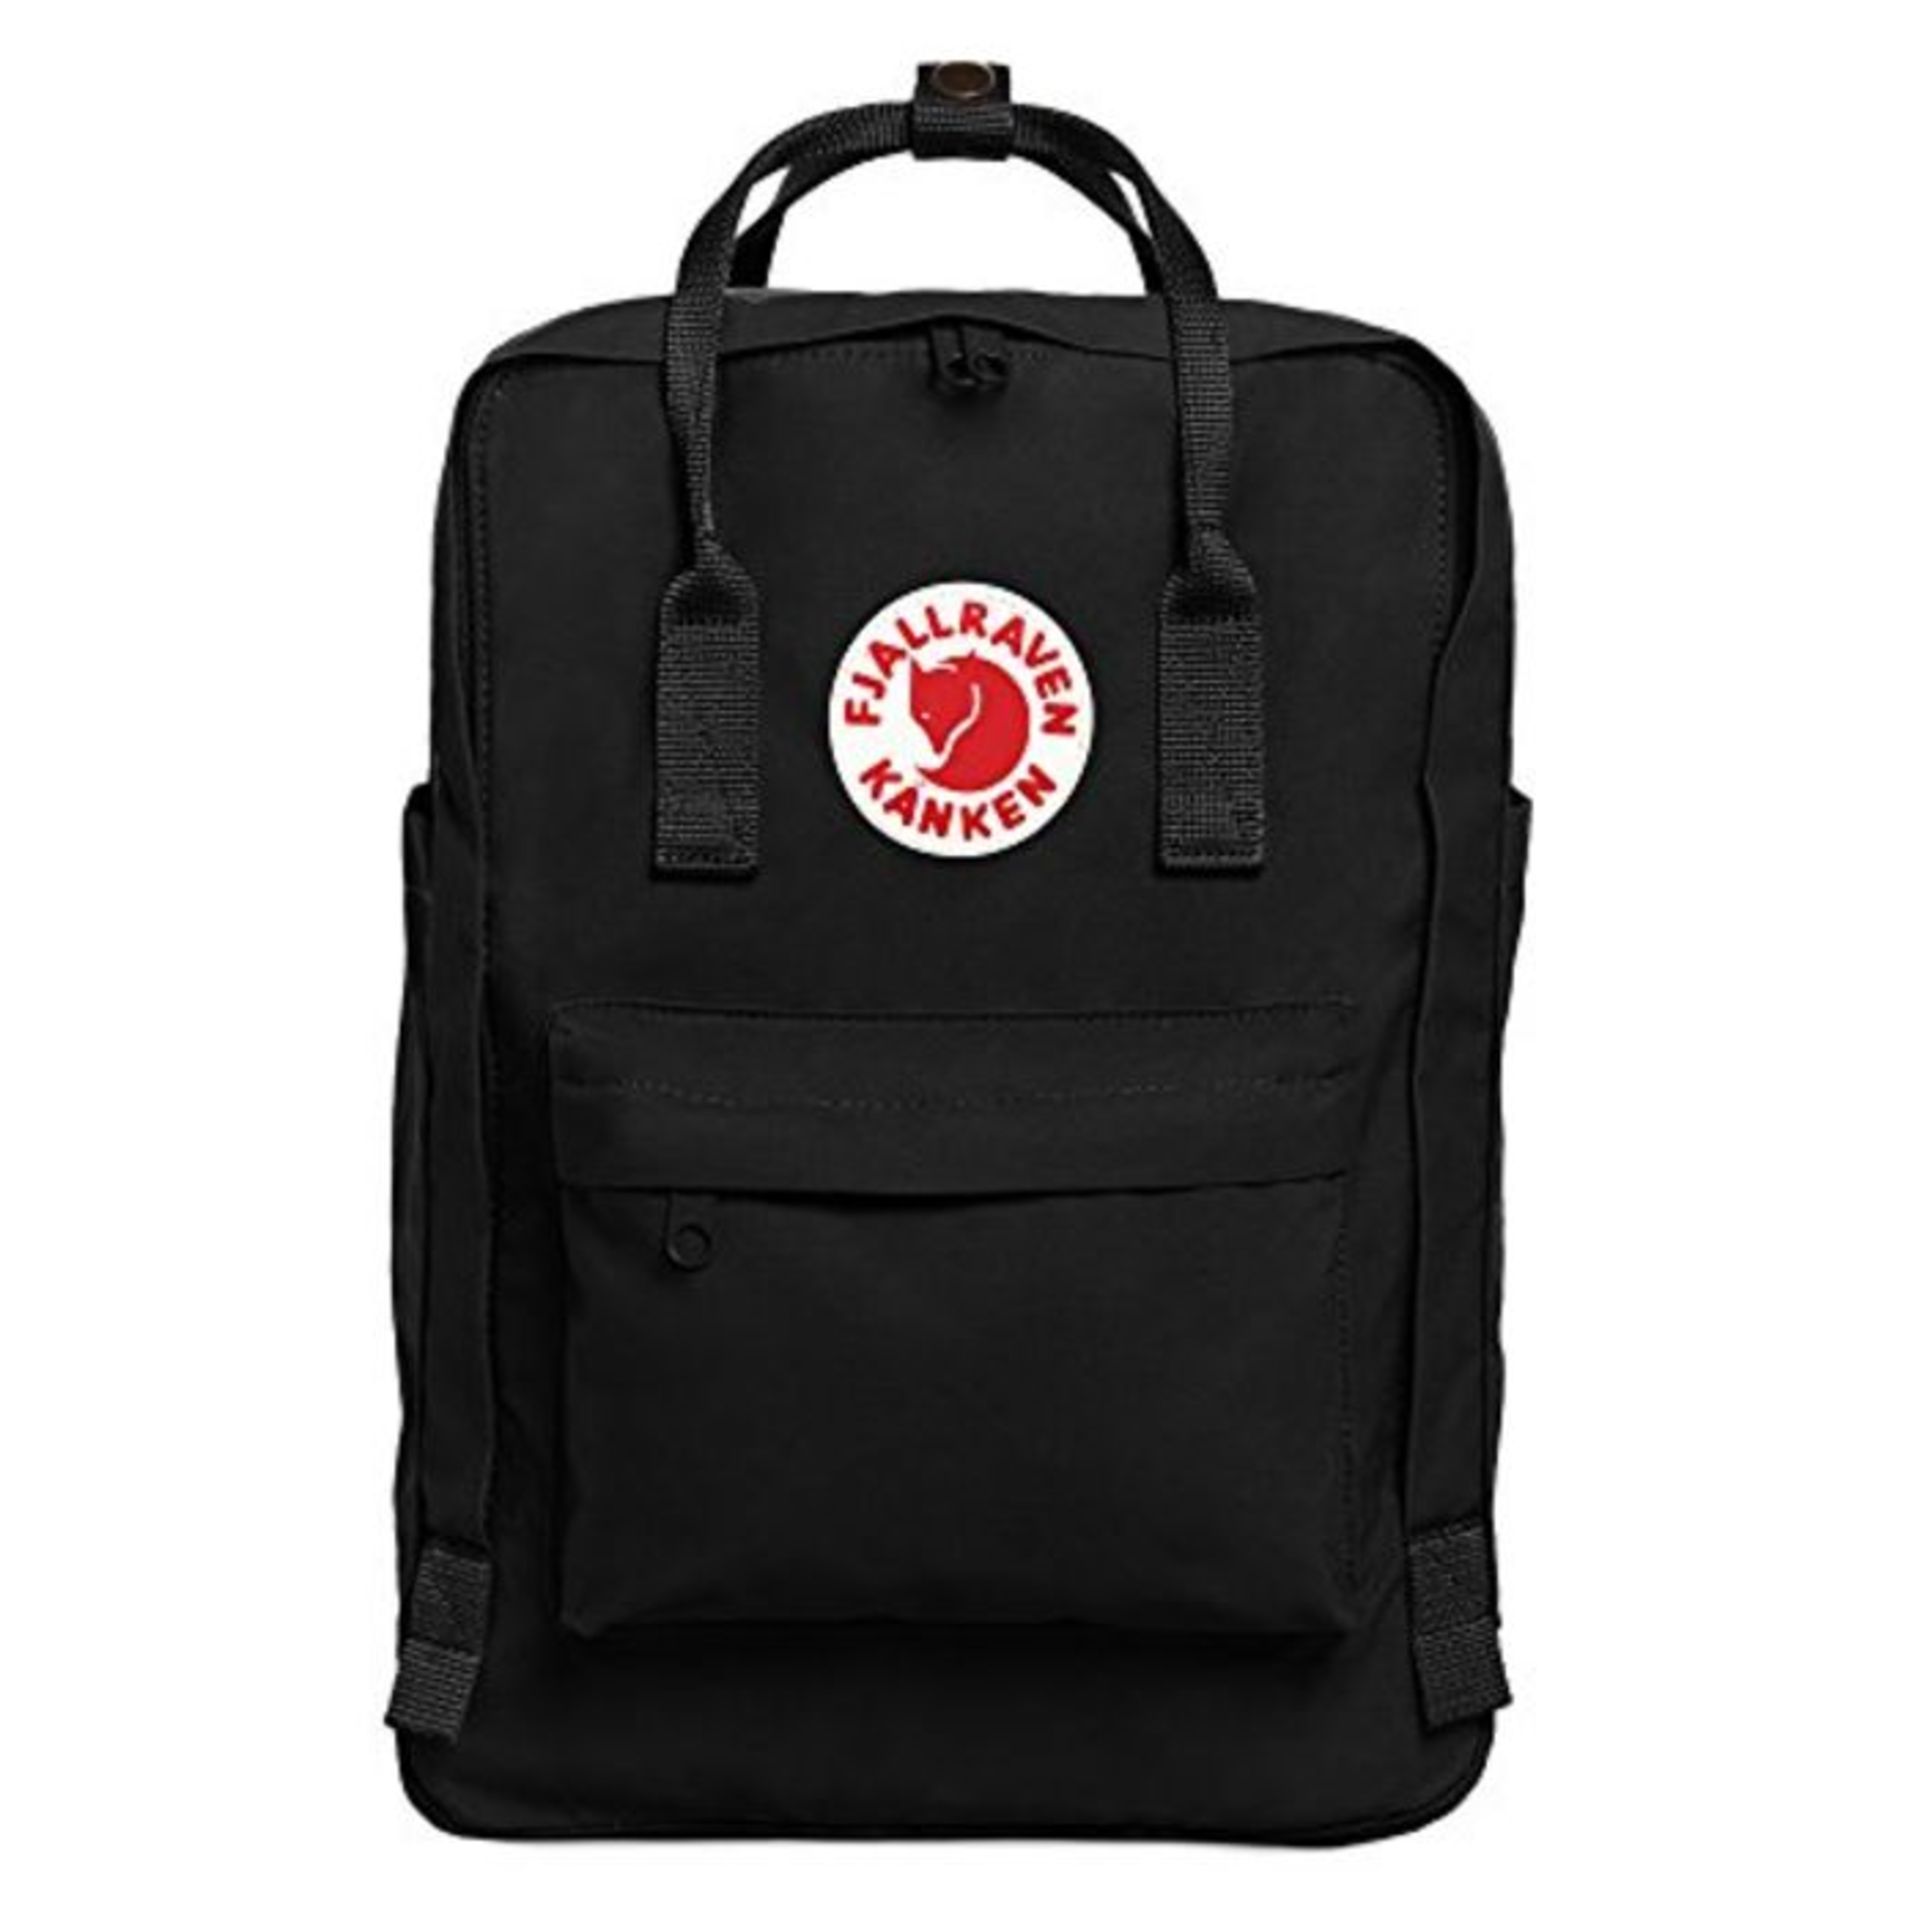 RRP £89.00 Fjällräven Lightweight Kanken Outdoor Hiking Backpack available in Black - One Size